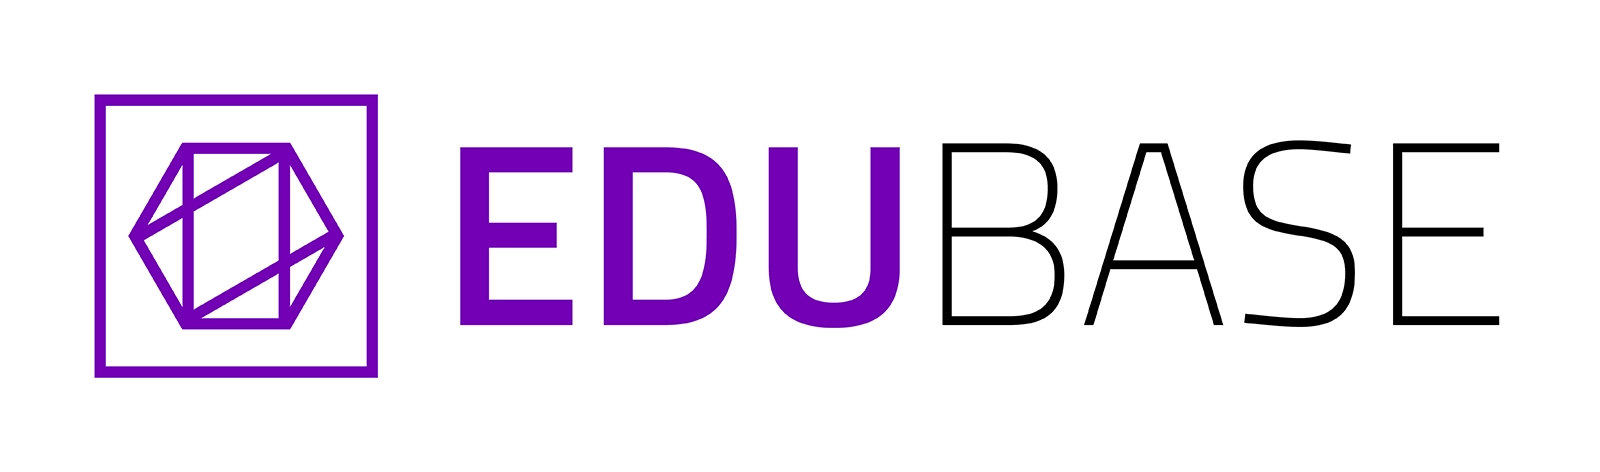 EduBase logo